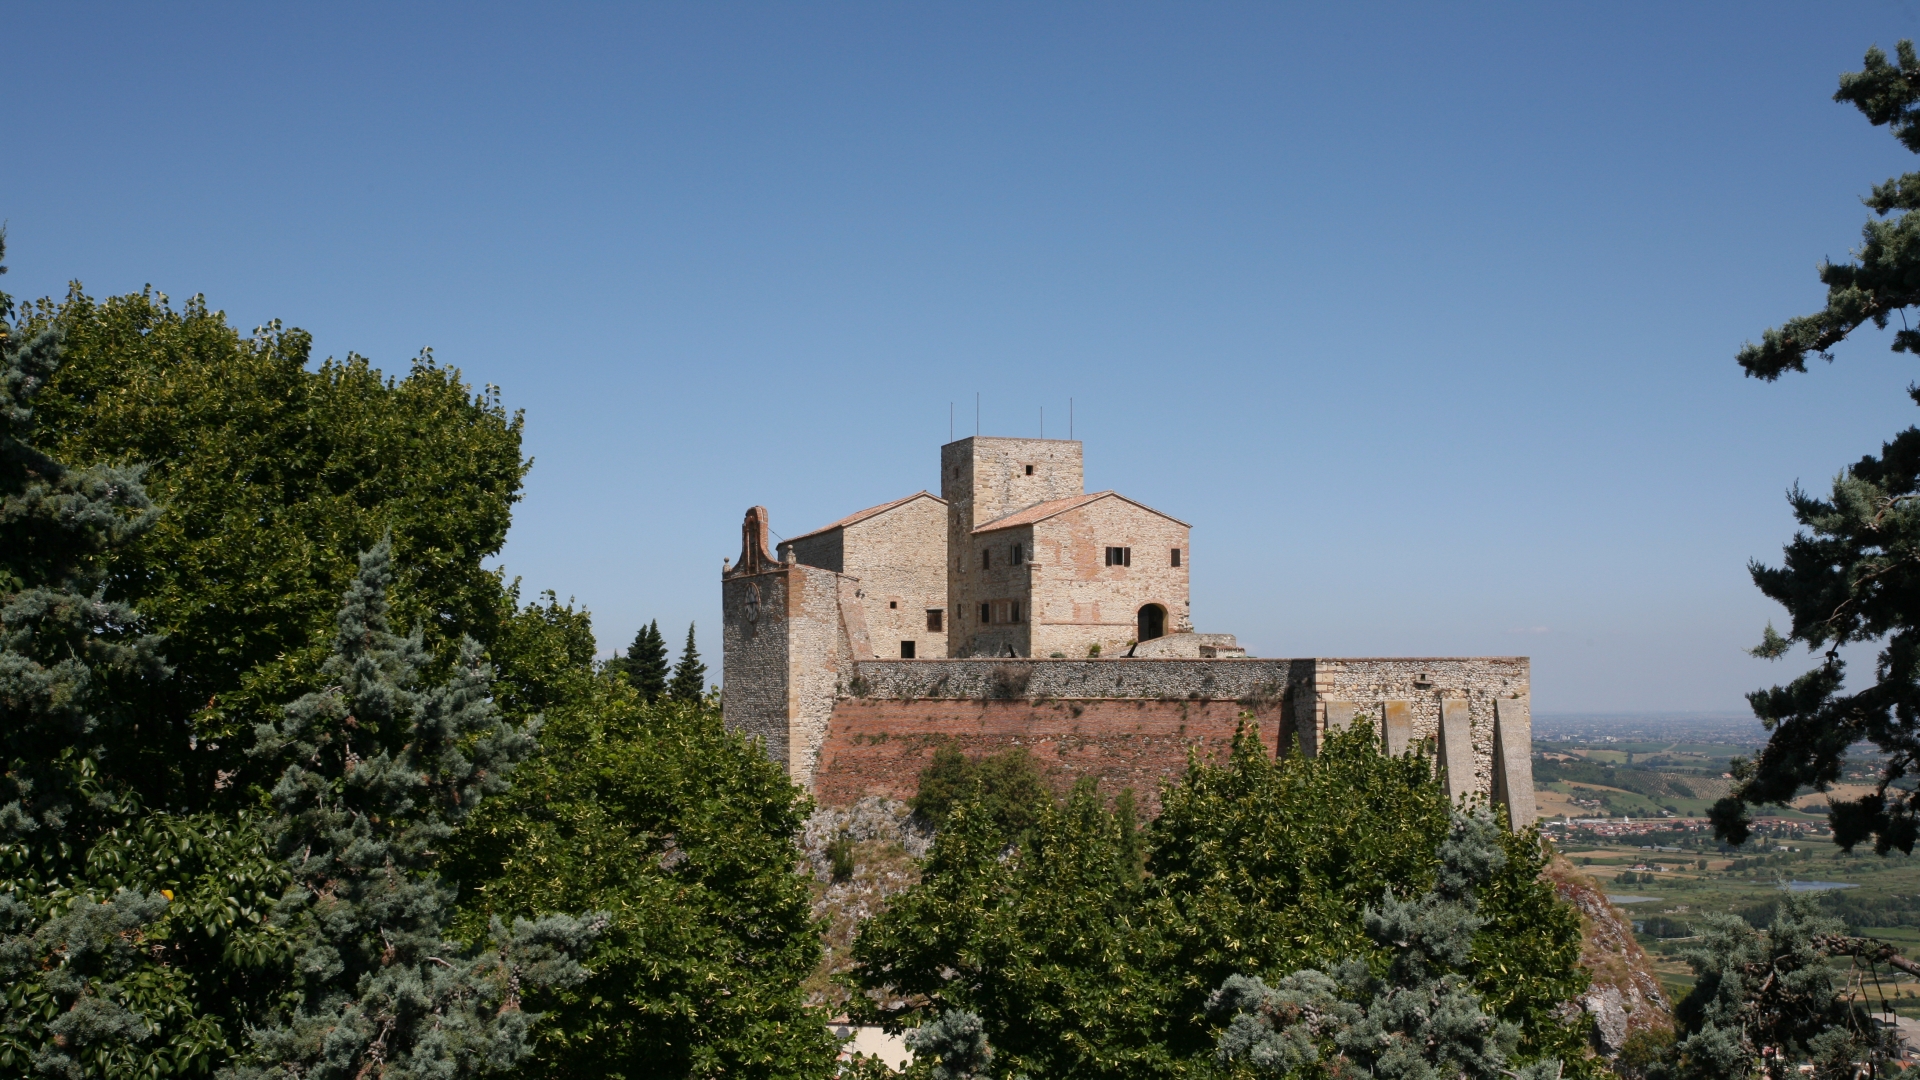 Verucchio | Rocca Malatestiana photos de Paritani